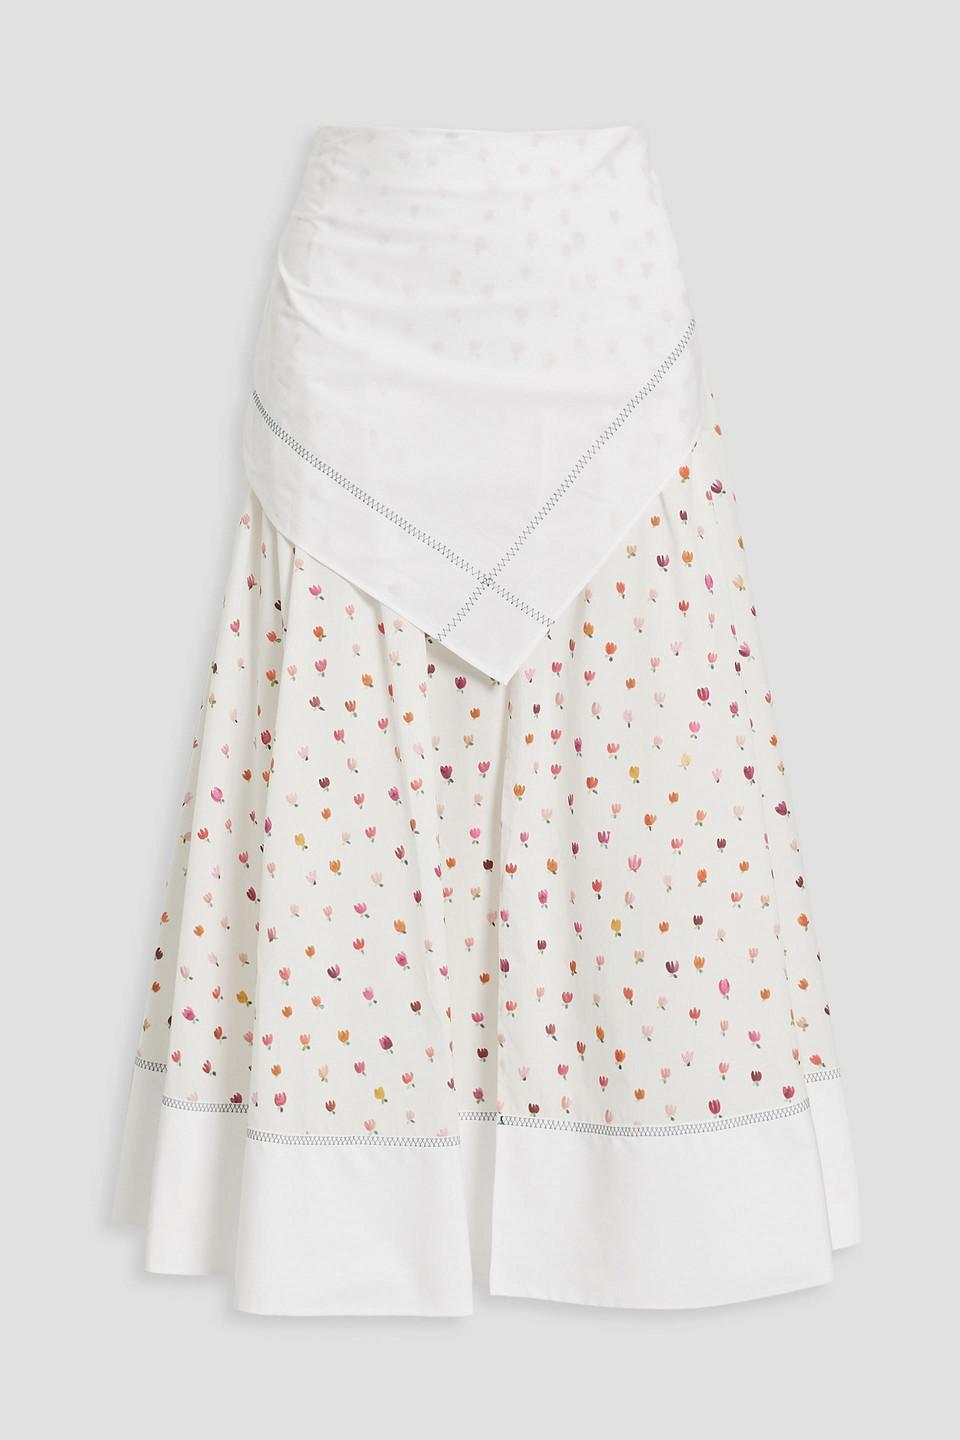 Rosie Assoulin Layered Floral-print Cotton-poplin Midi Skirt in White | Lyst